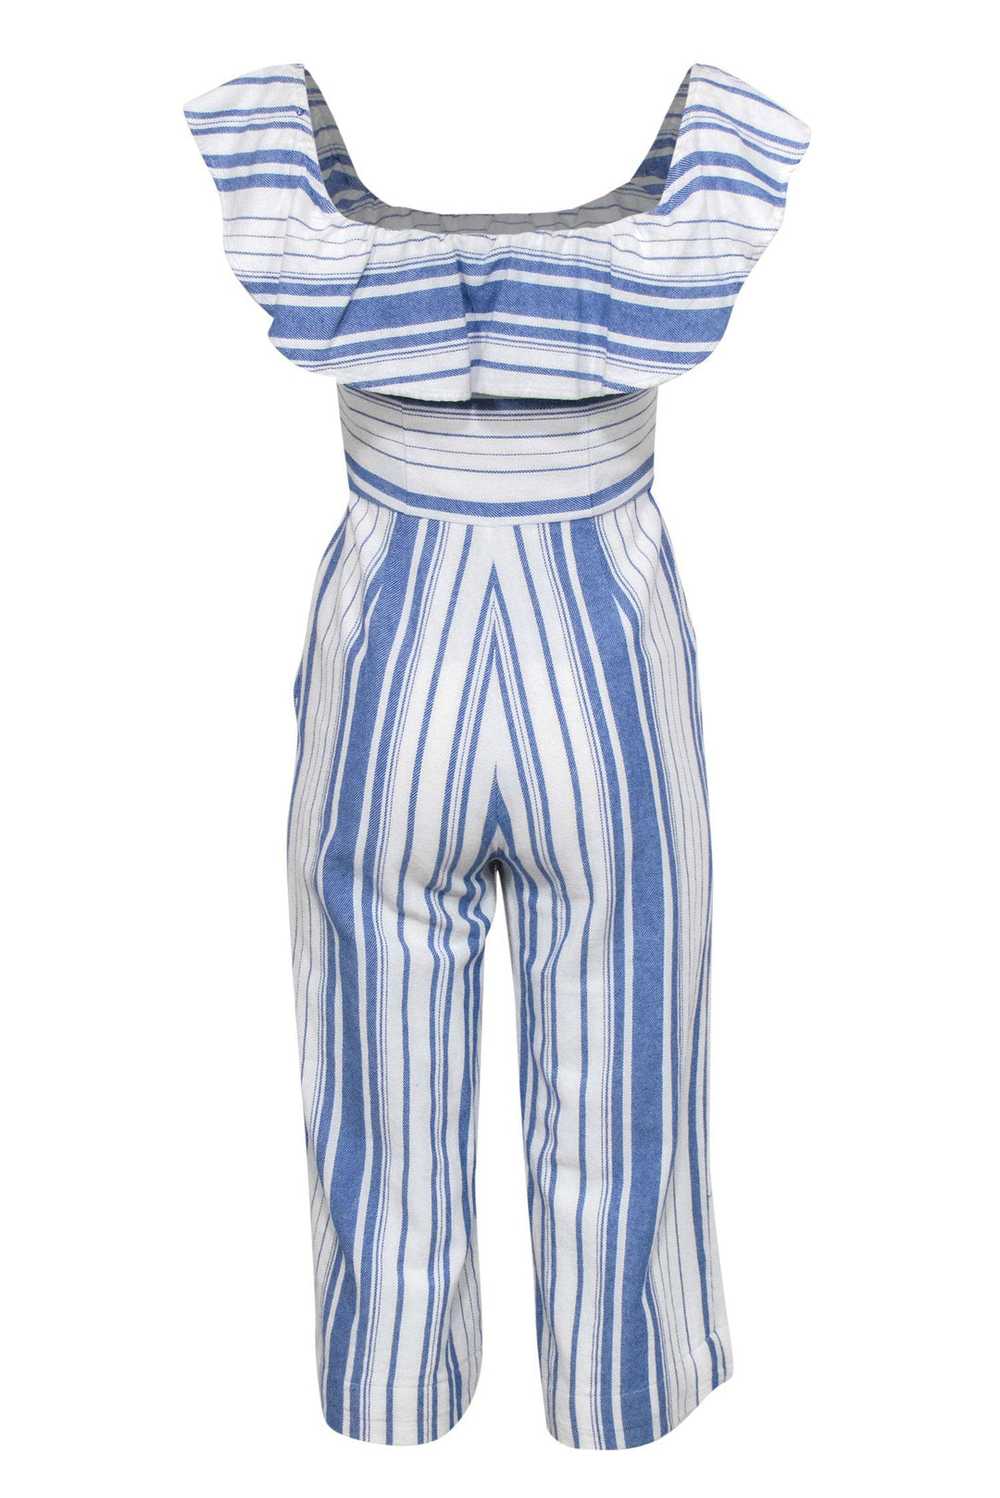 Joie - Blue & White Striped Sleeveless Wide Leg J… - image 3